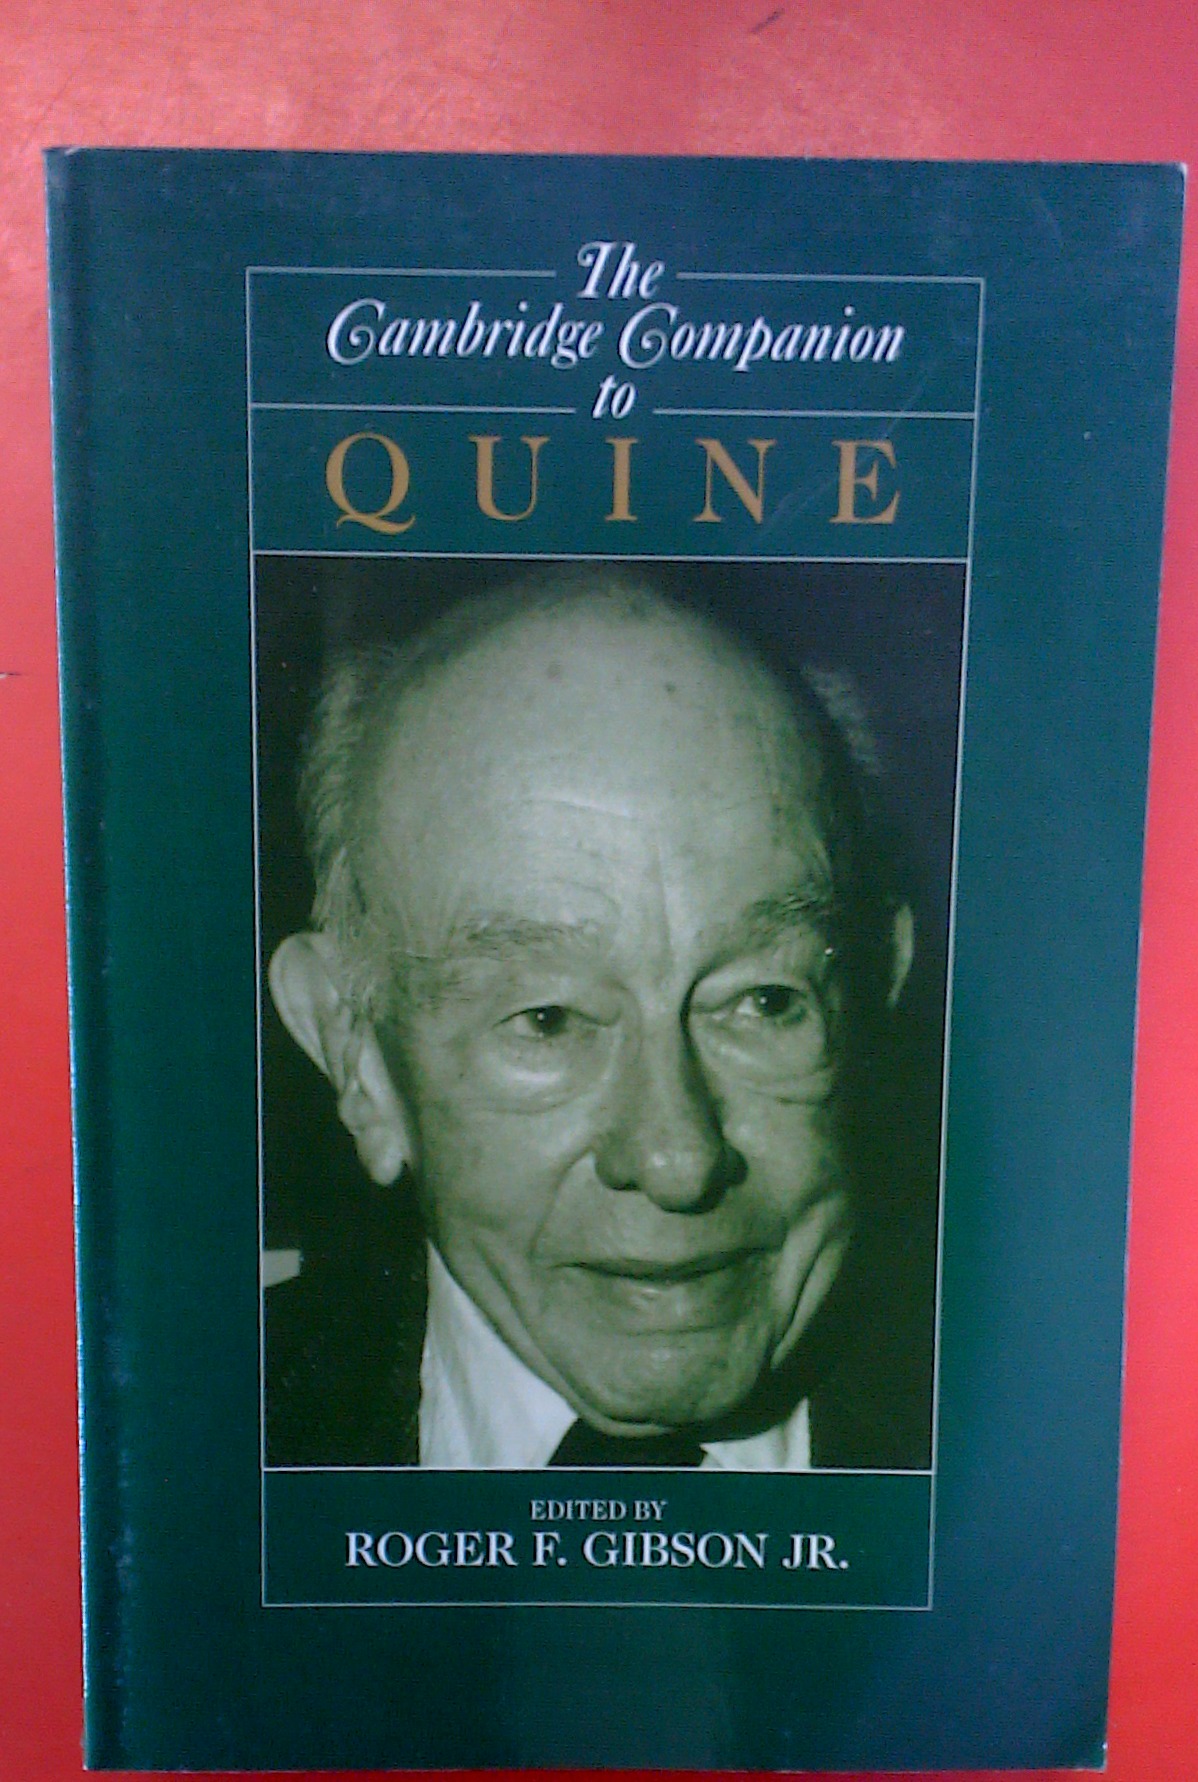 The Cambridge Companion to Quine - Roger F. Gibson JR.